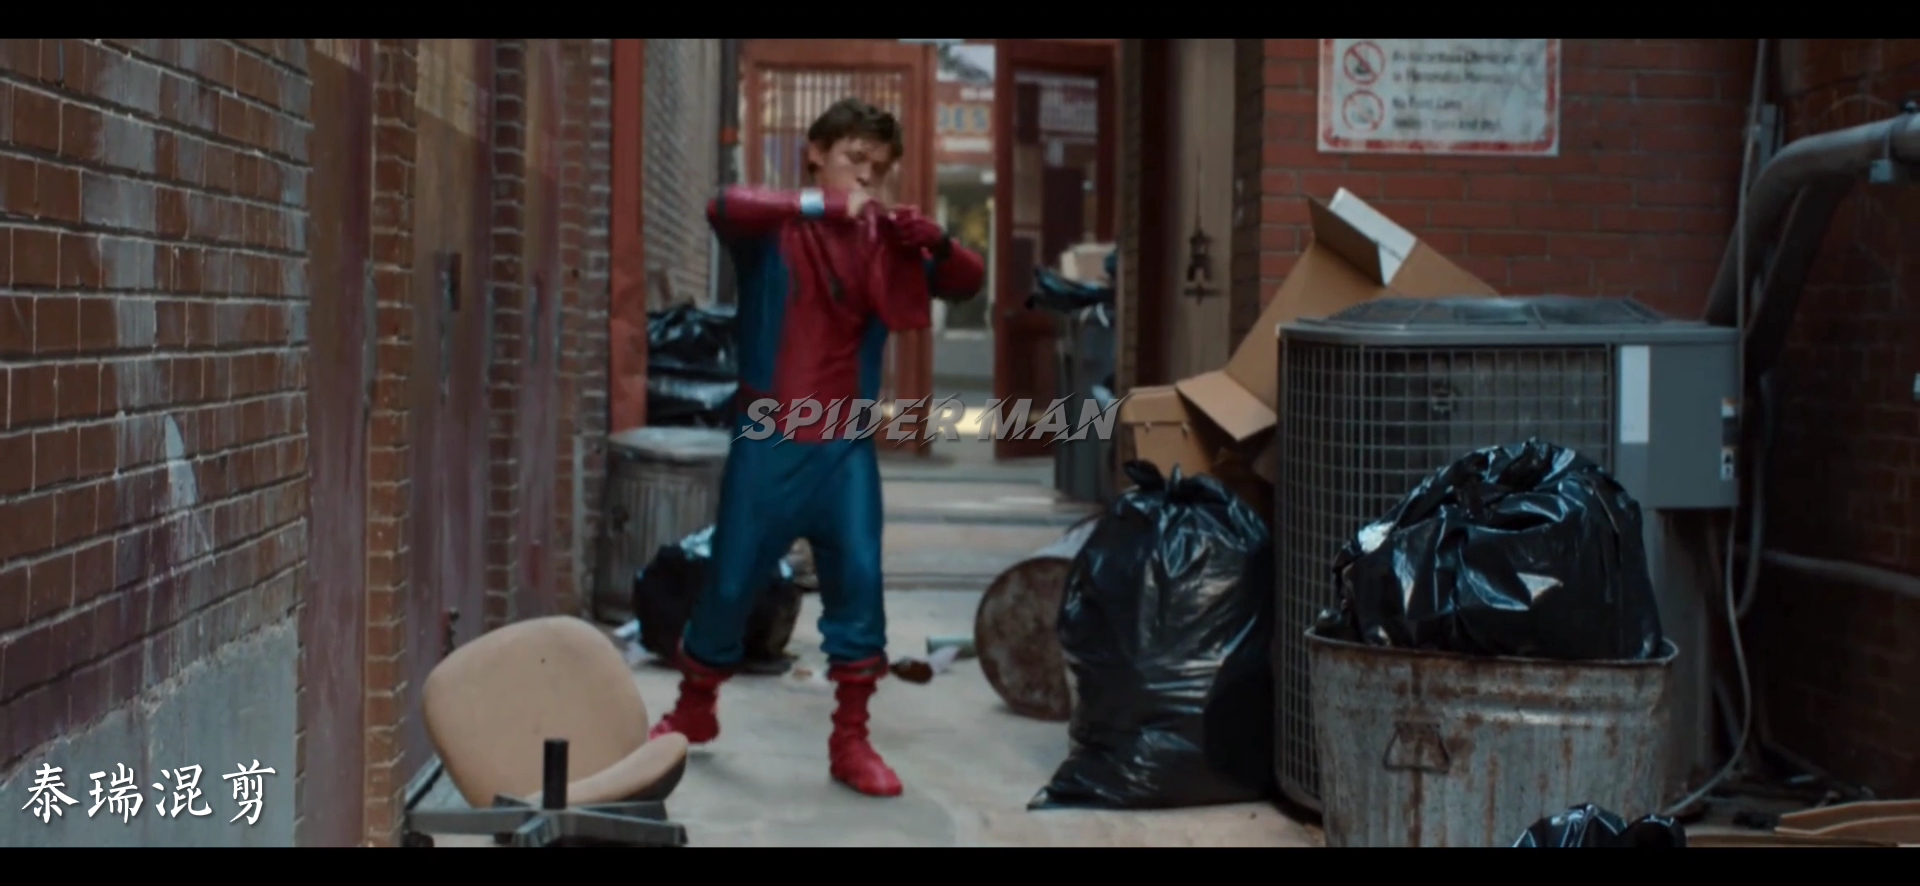 【蜘蛛侠/Spider-Man】三代蜘蛛侠混剪，能力越大，责任越大！_哔哩哔哩 (゜-゜)つロ 干杯~-bilibili